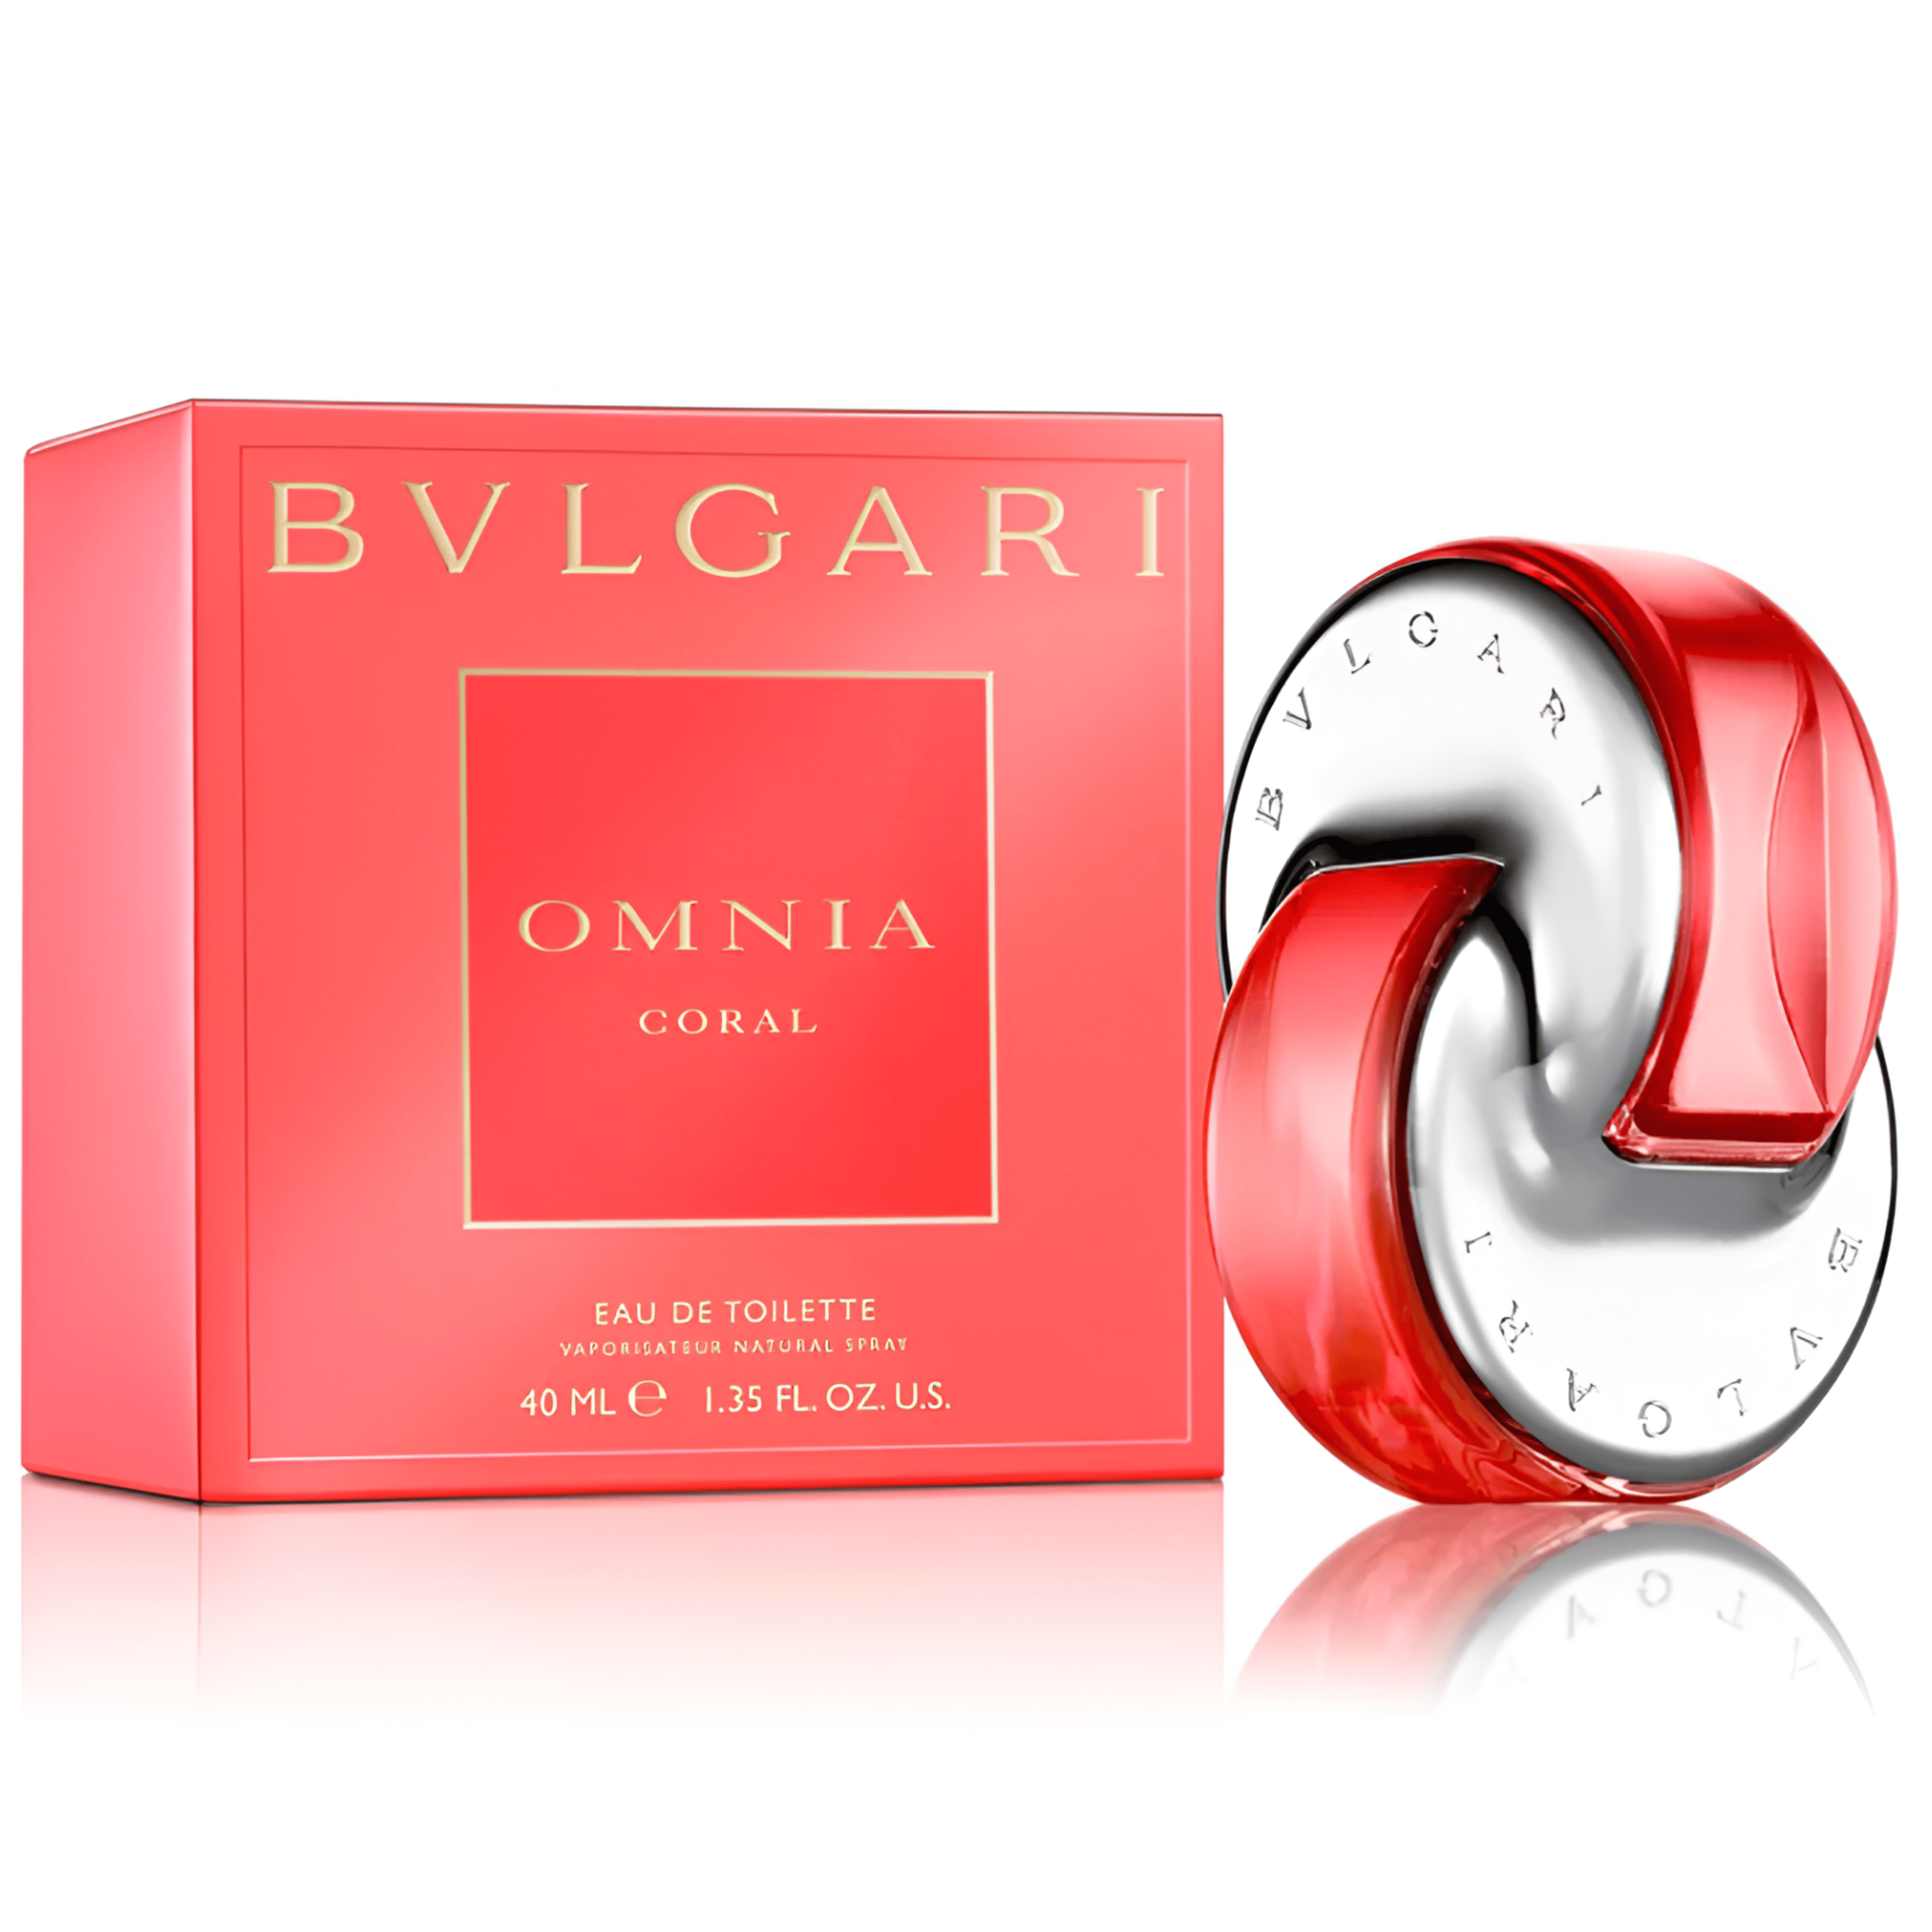 Bvlgari Omnia Coral EDT | My Perfume Shop Australia